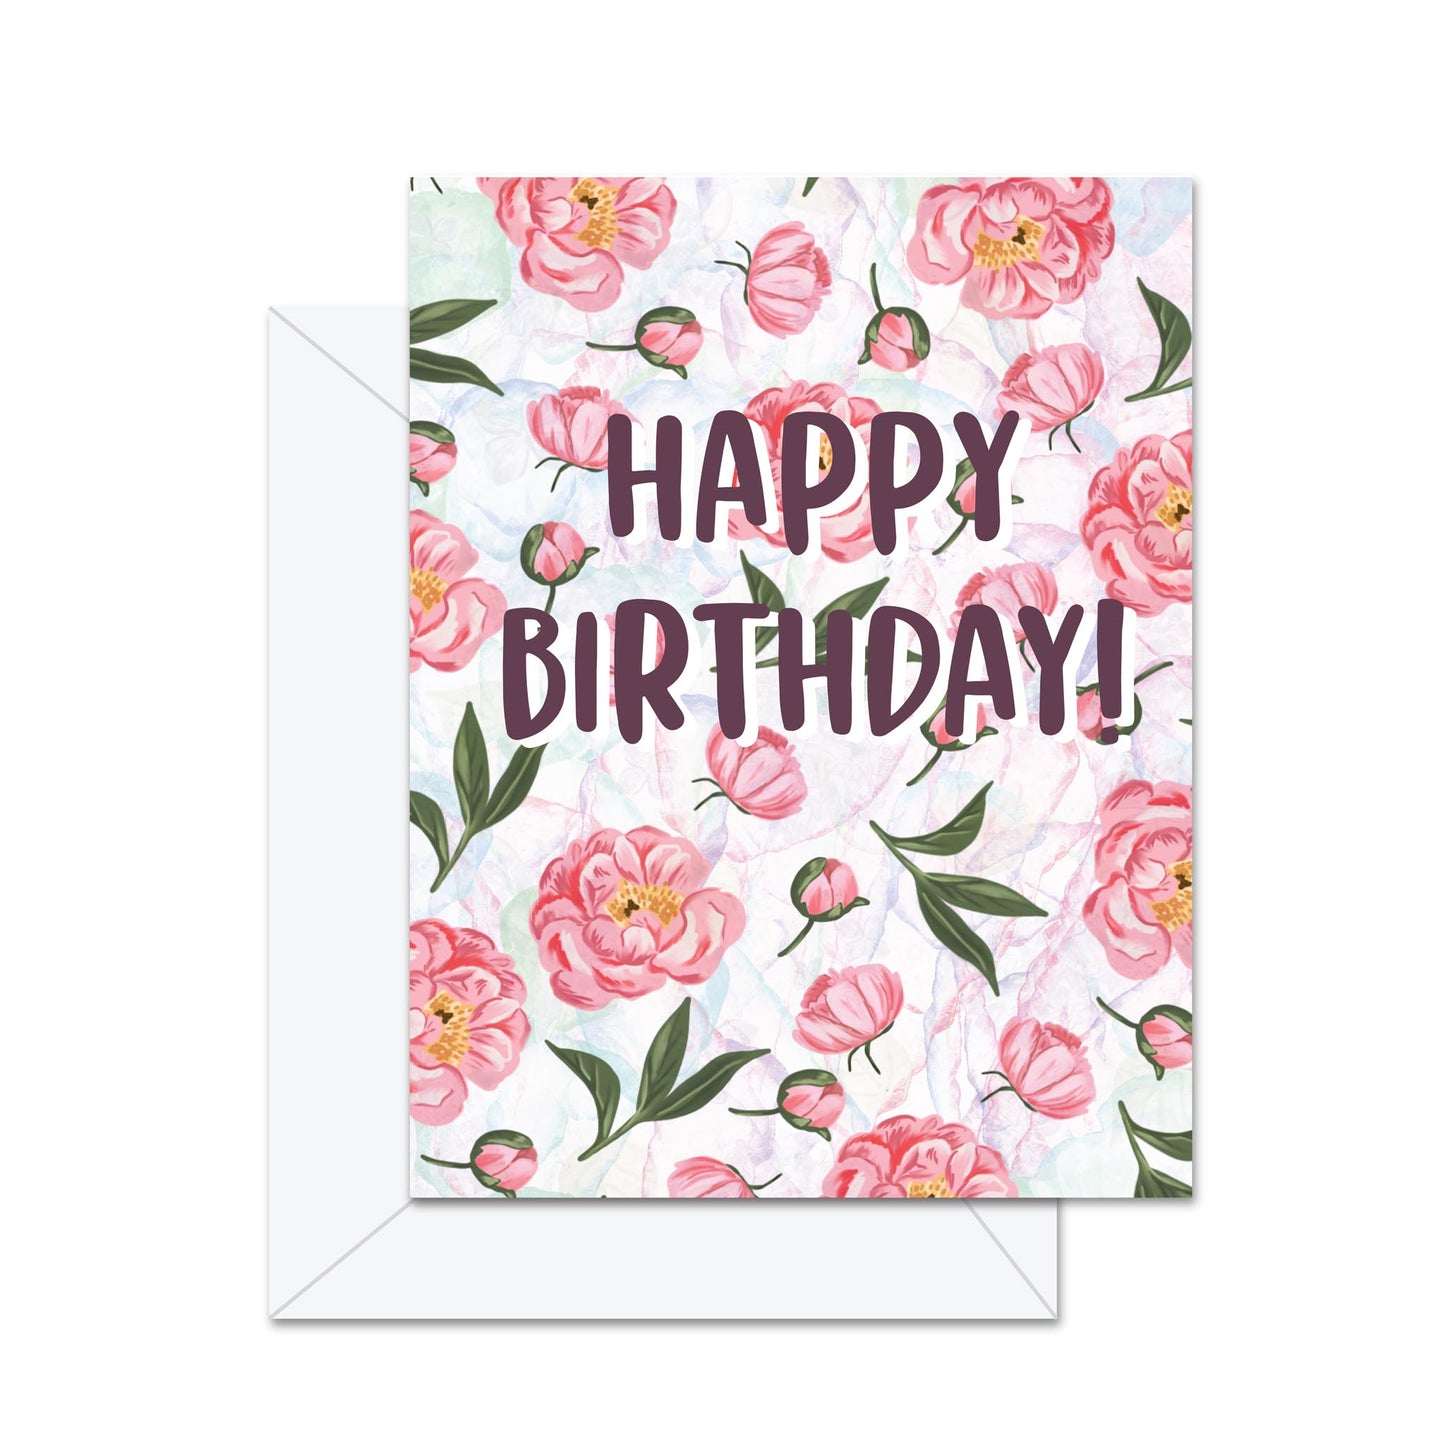 Happy Birthday! (Peonies) - Greeting Card